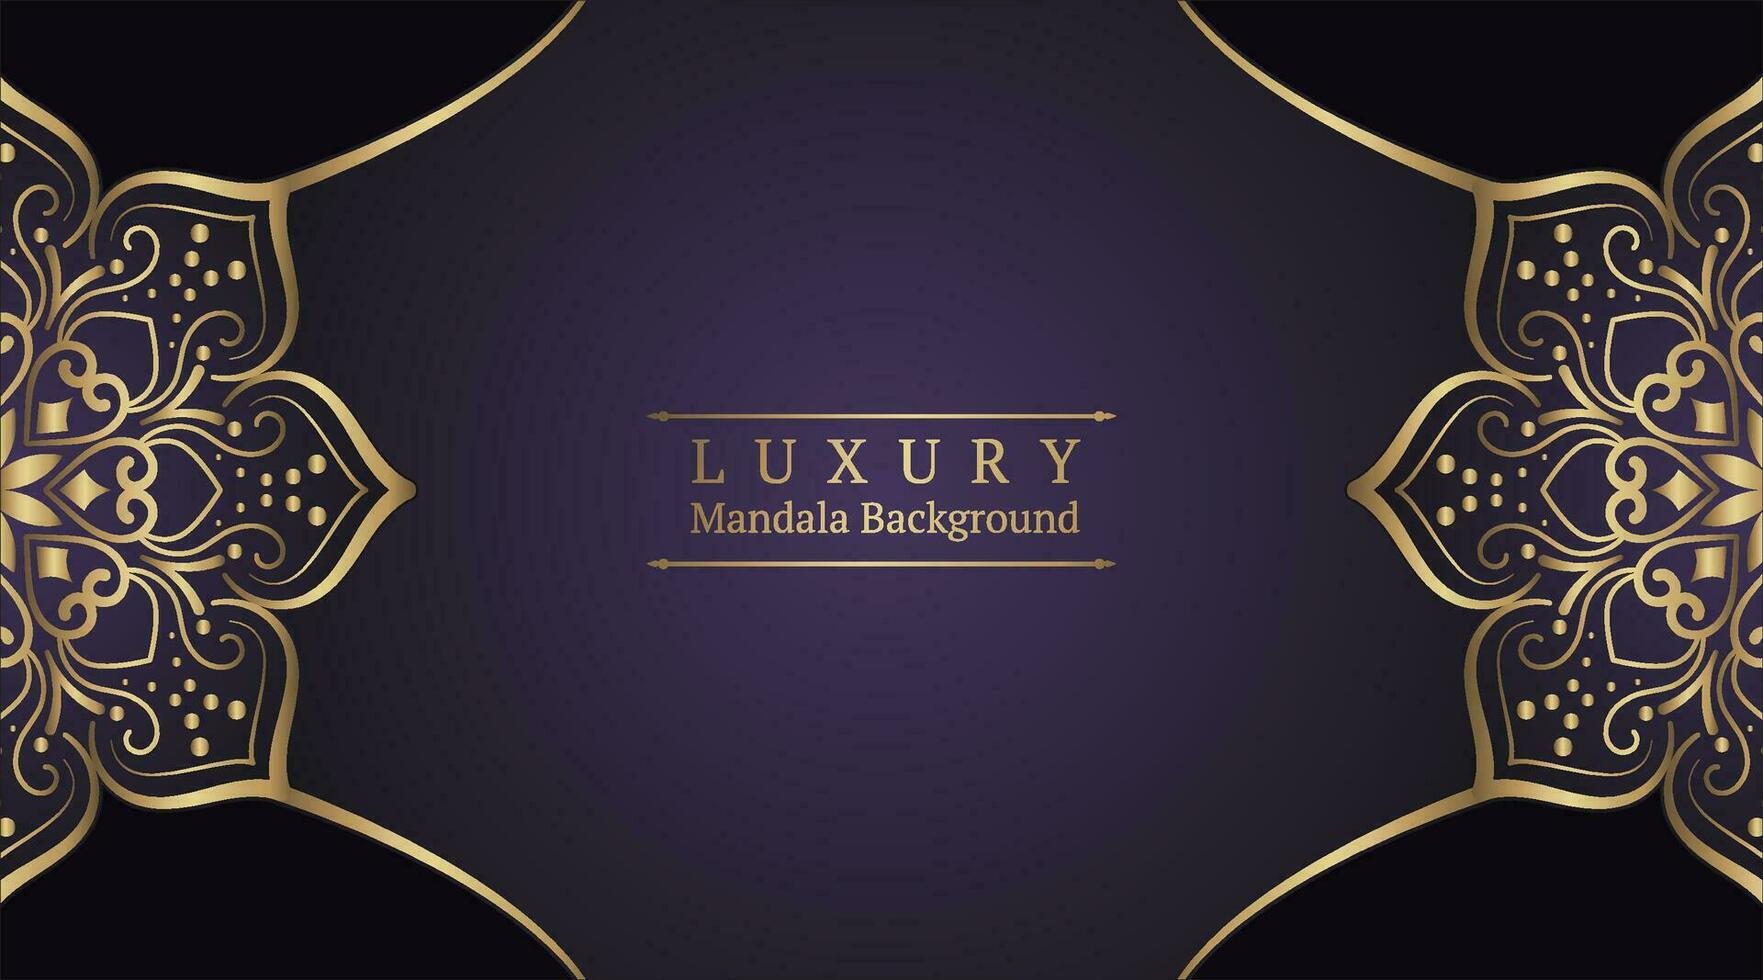 Luxury background with ornamental mandala vector